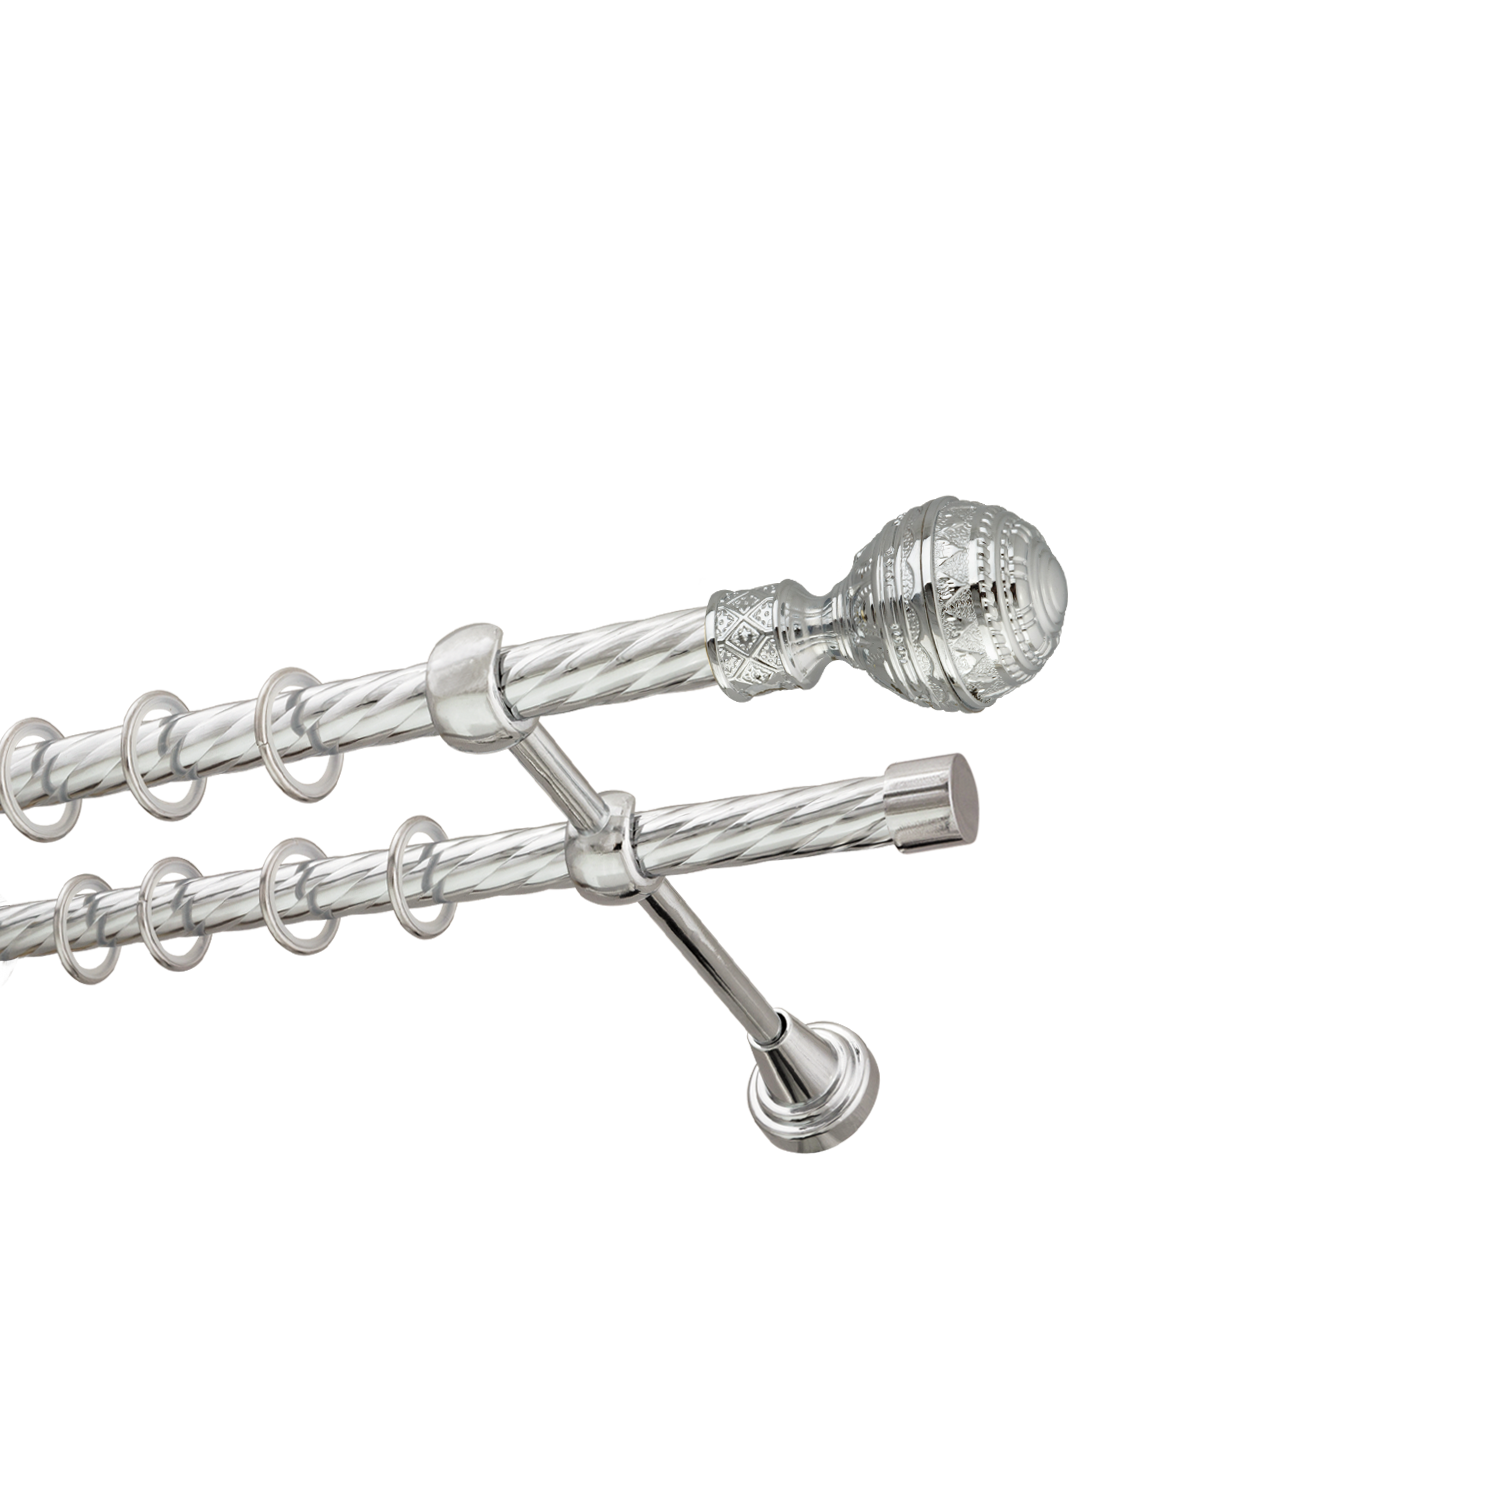 Металлический карниз для штор Роял, двухрядный 16/16 мм, серебро, витая штанга, длина 180 см - фото Wikidecor.ru